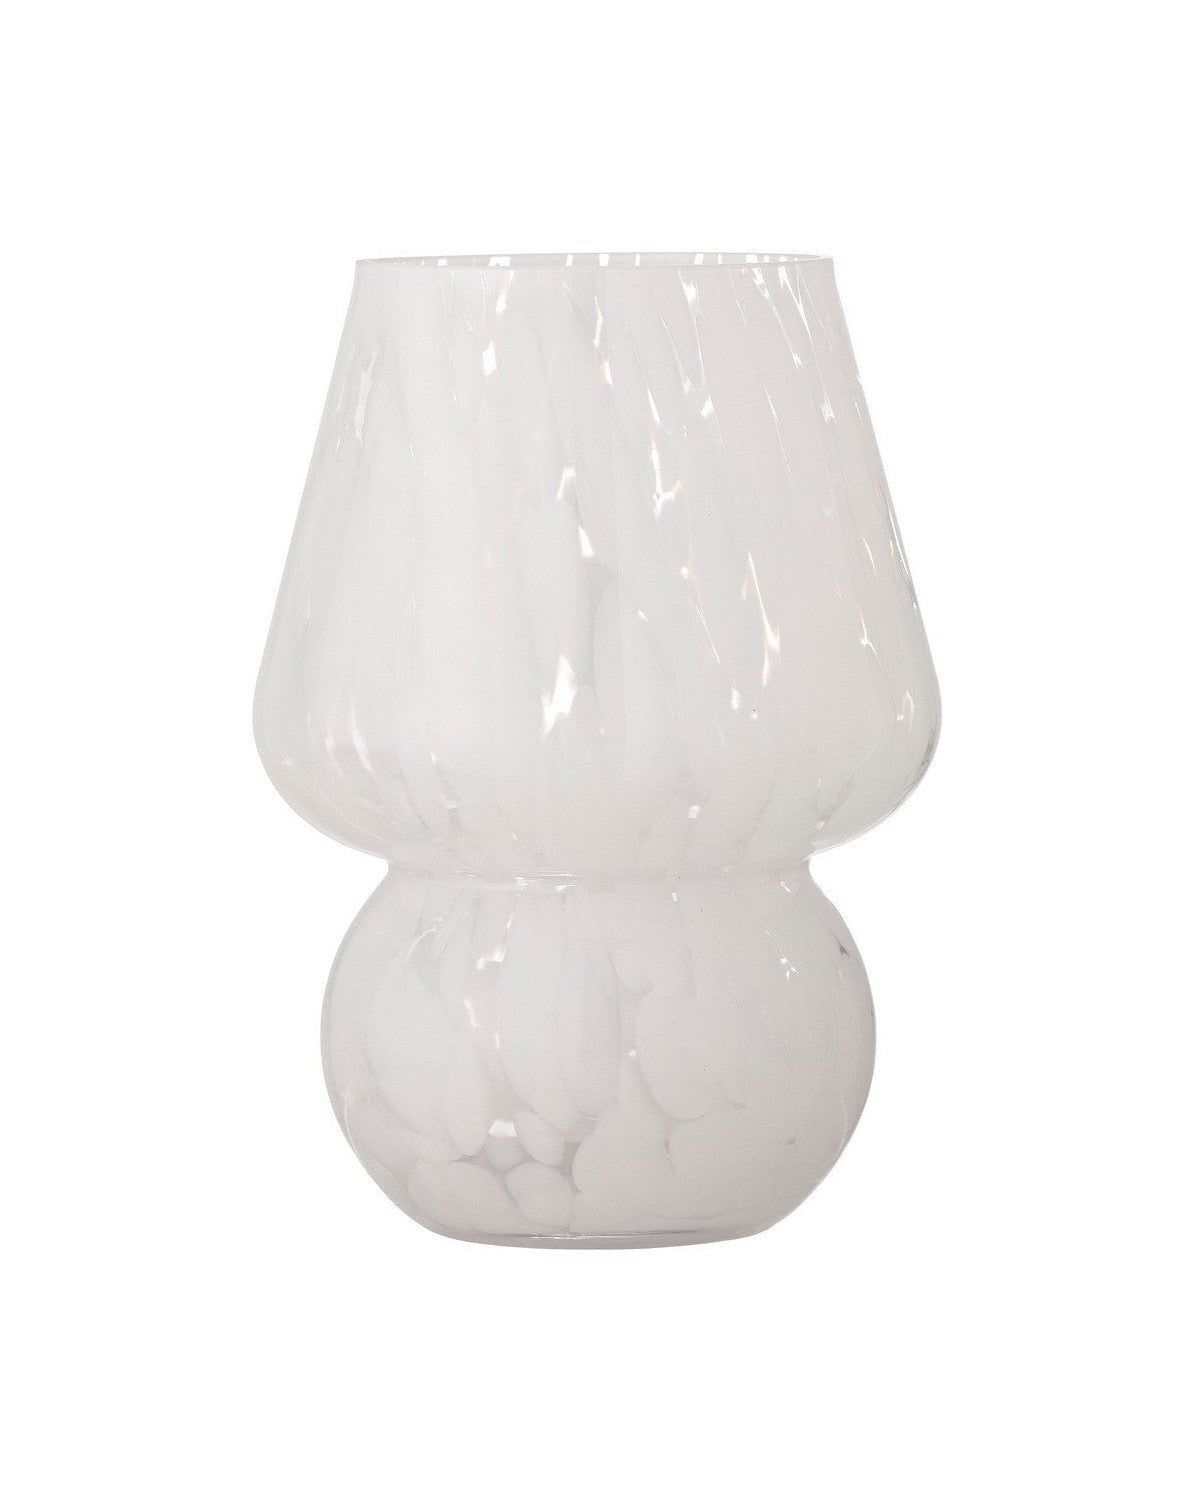 Bloomingville Halim Vase, White, Glass